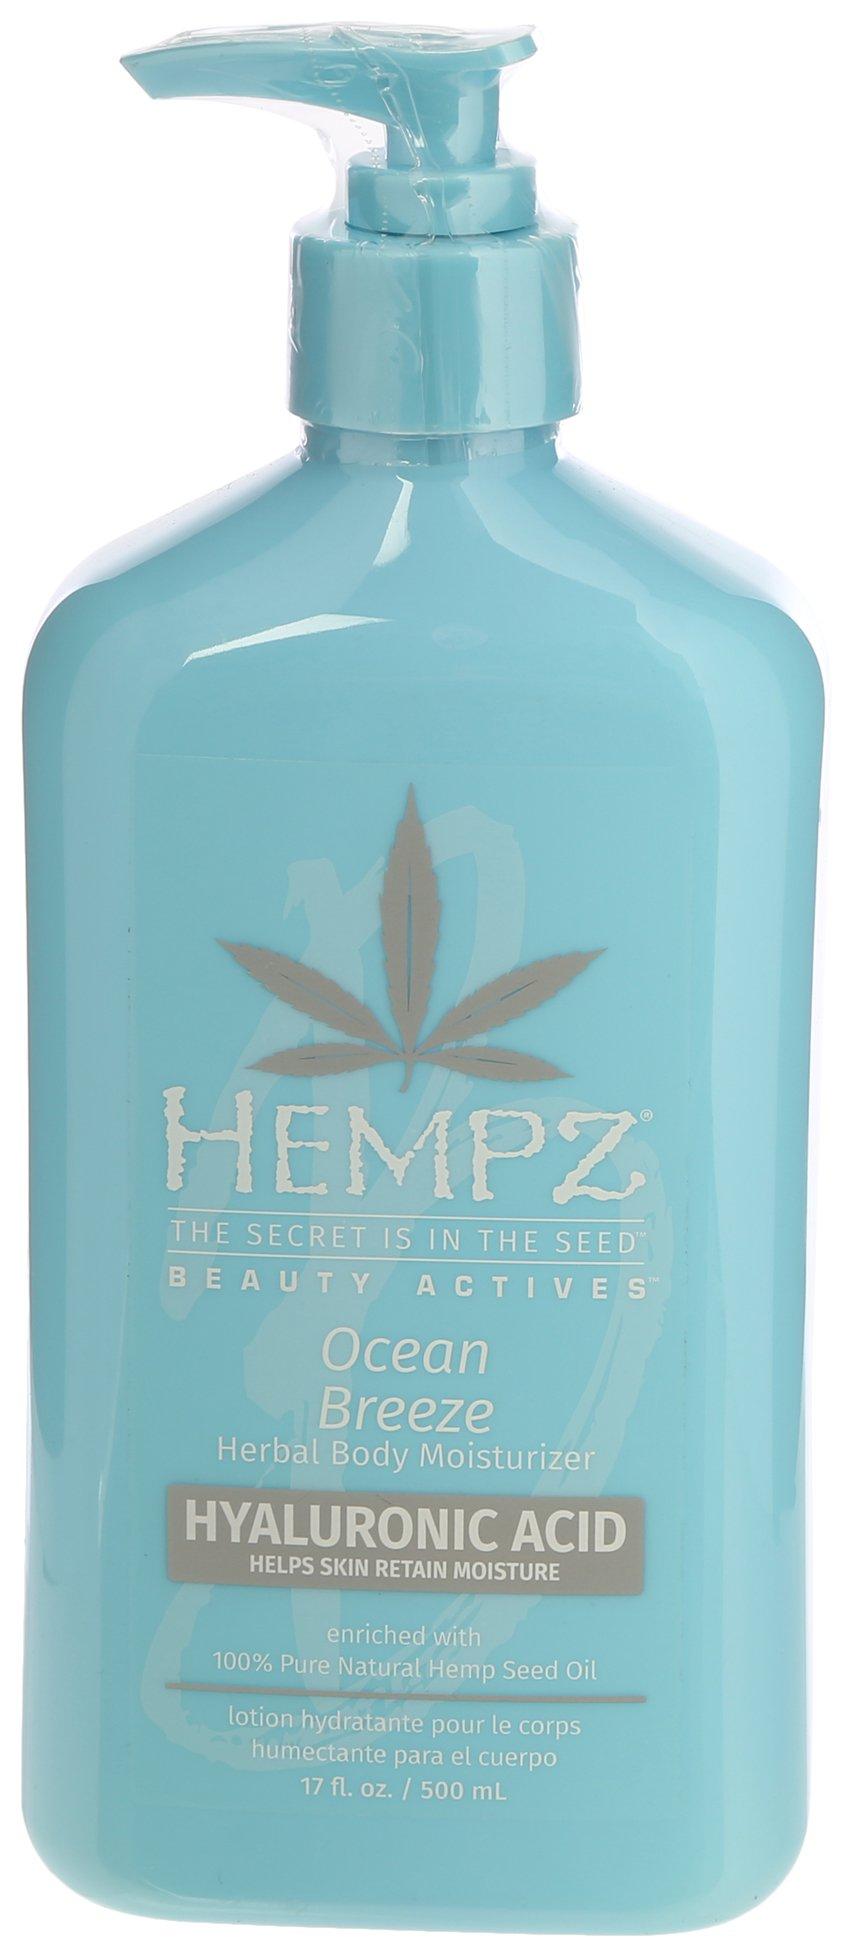 17 Fl.Oz. Ocean Breeze Herbal Body Moisturizer